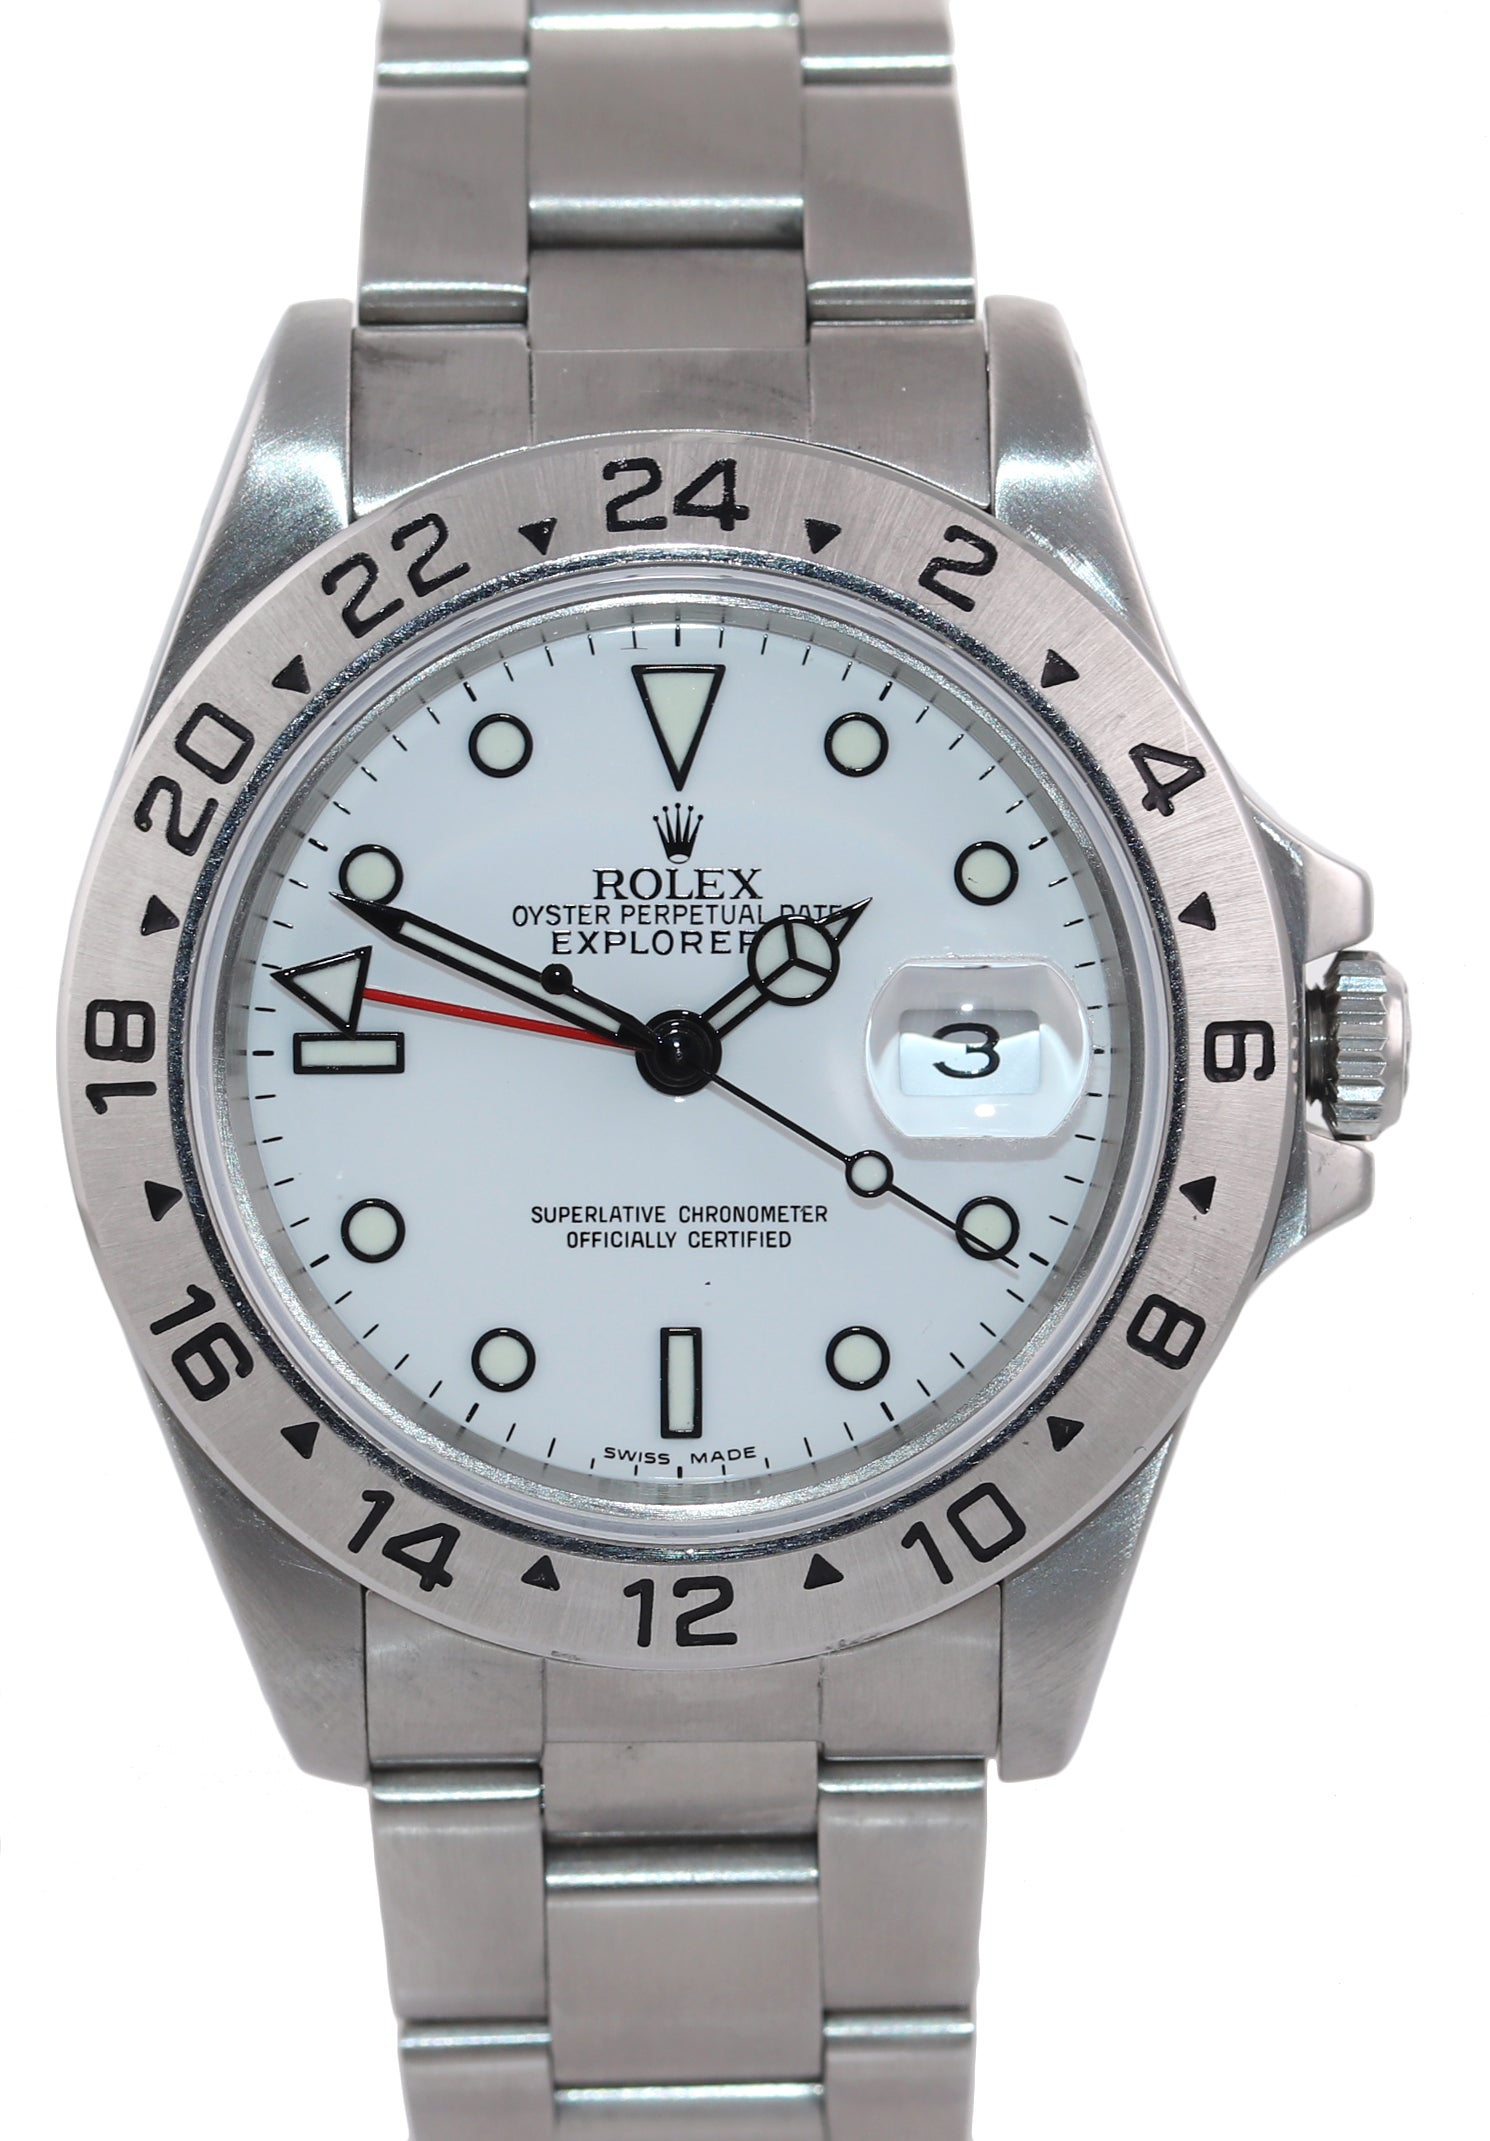 MINT Rolex Explorer II 16570 Polar White Dial 40mm Date GMT Oyster Watch Box